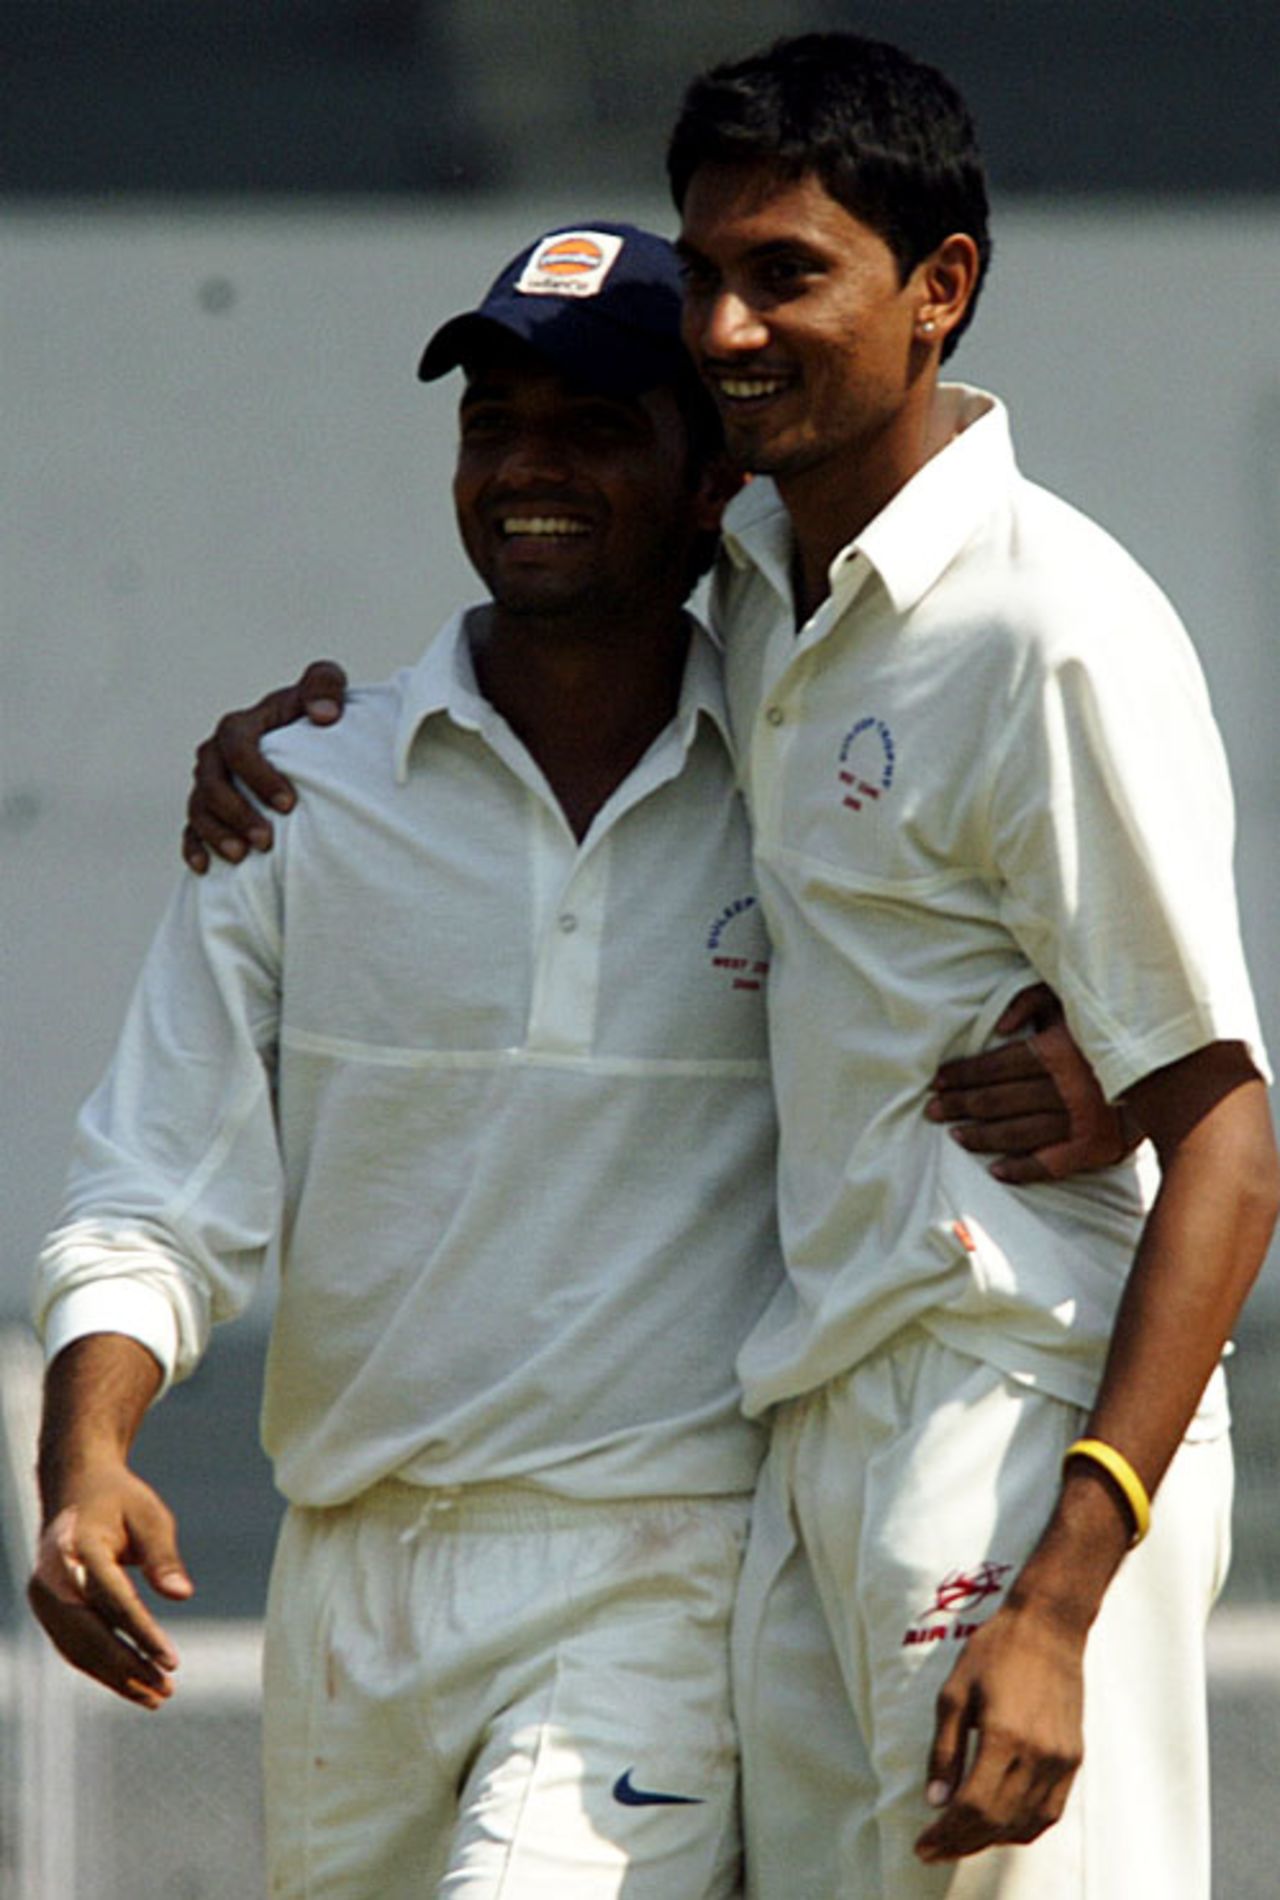 Ajinkya Rahane and Siddharth Trivedi celebrate a wicket, East Zone v West Zone, Duleep Trophy, 1st semi-final, Rajkot, 3rd day, January 31, 2008 